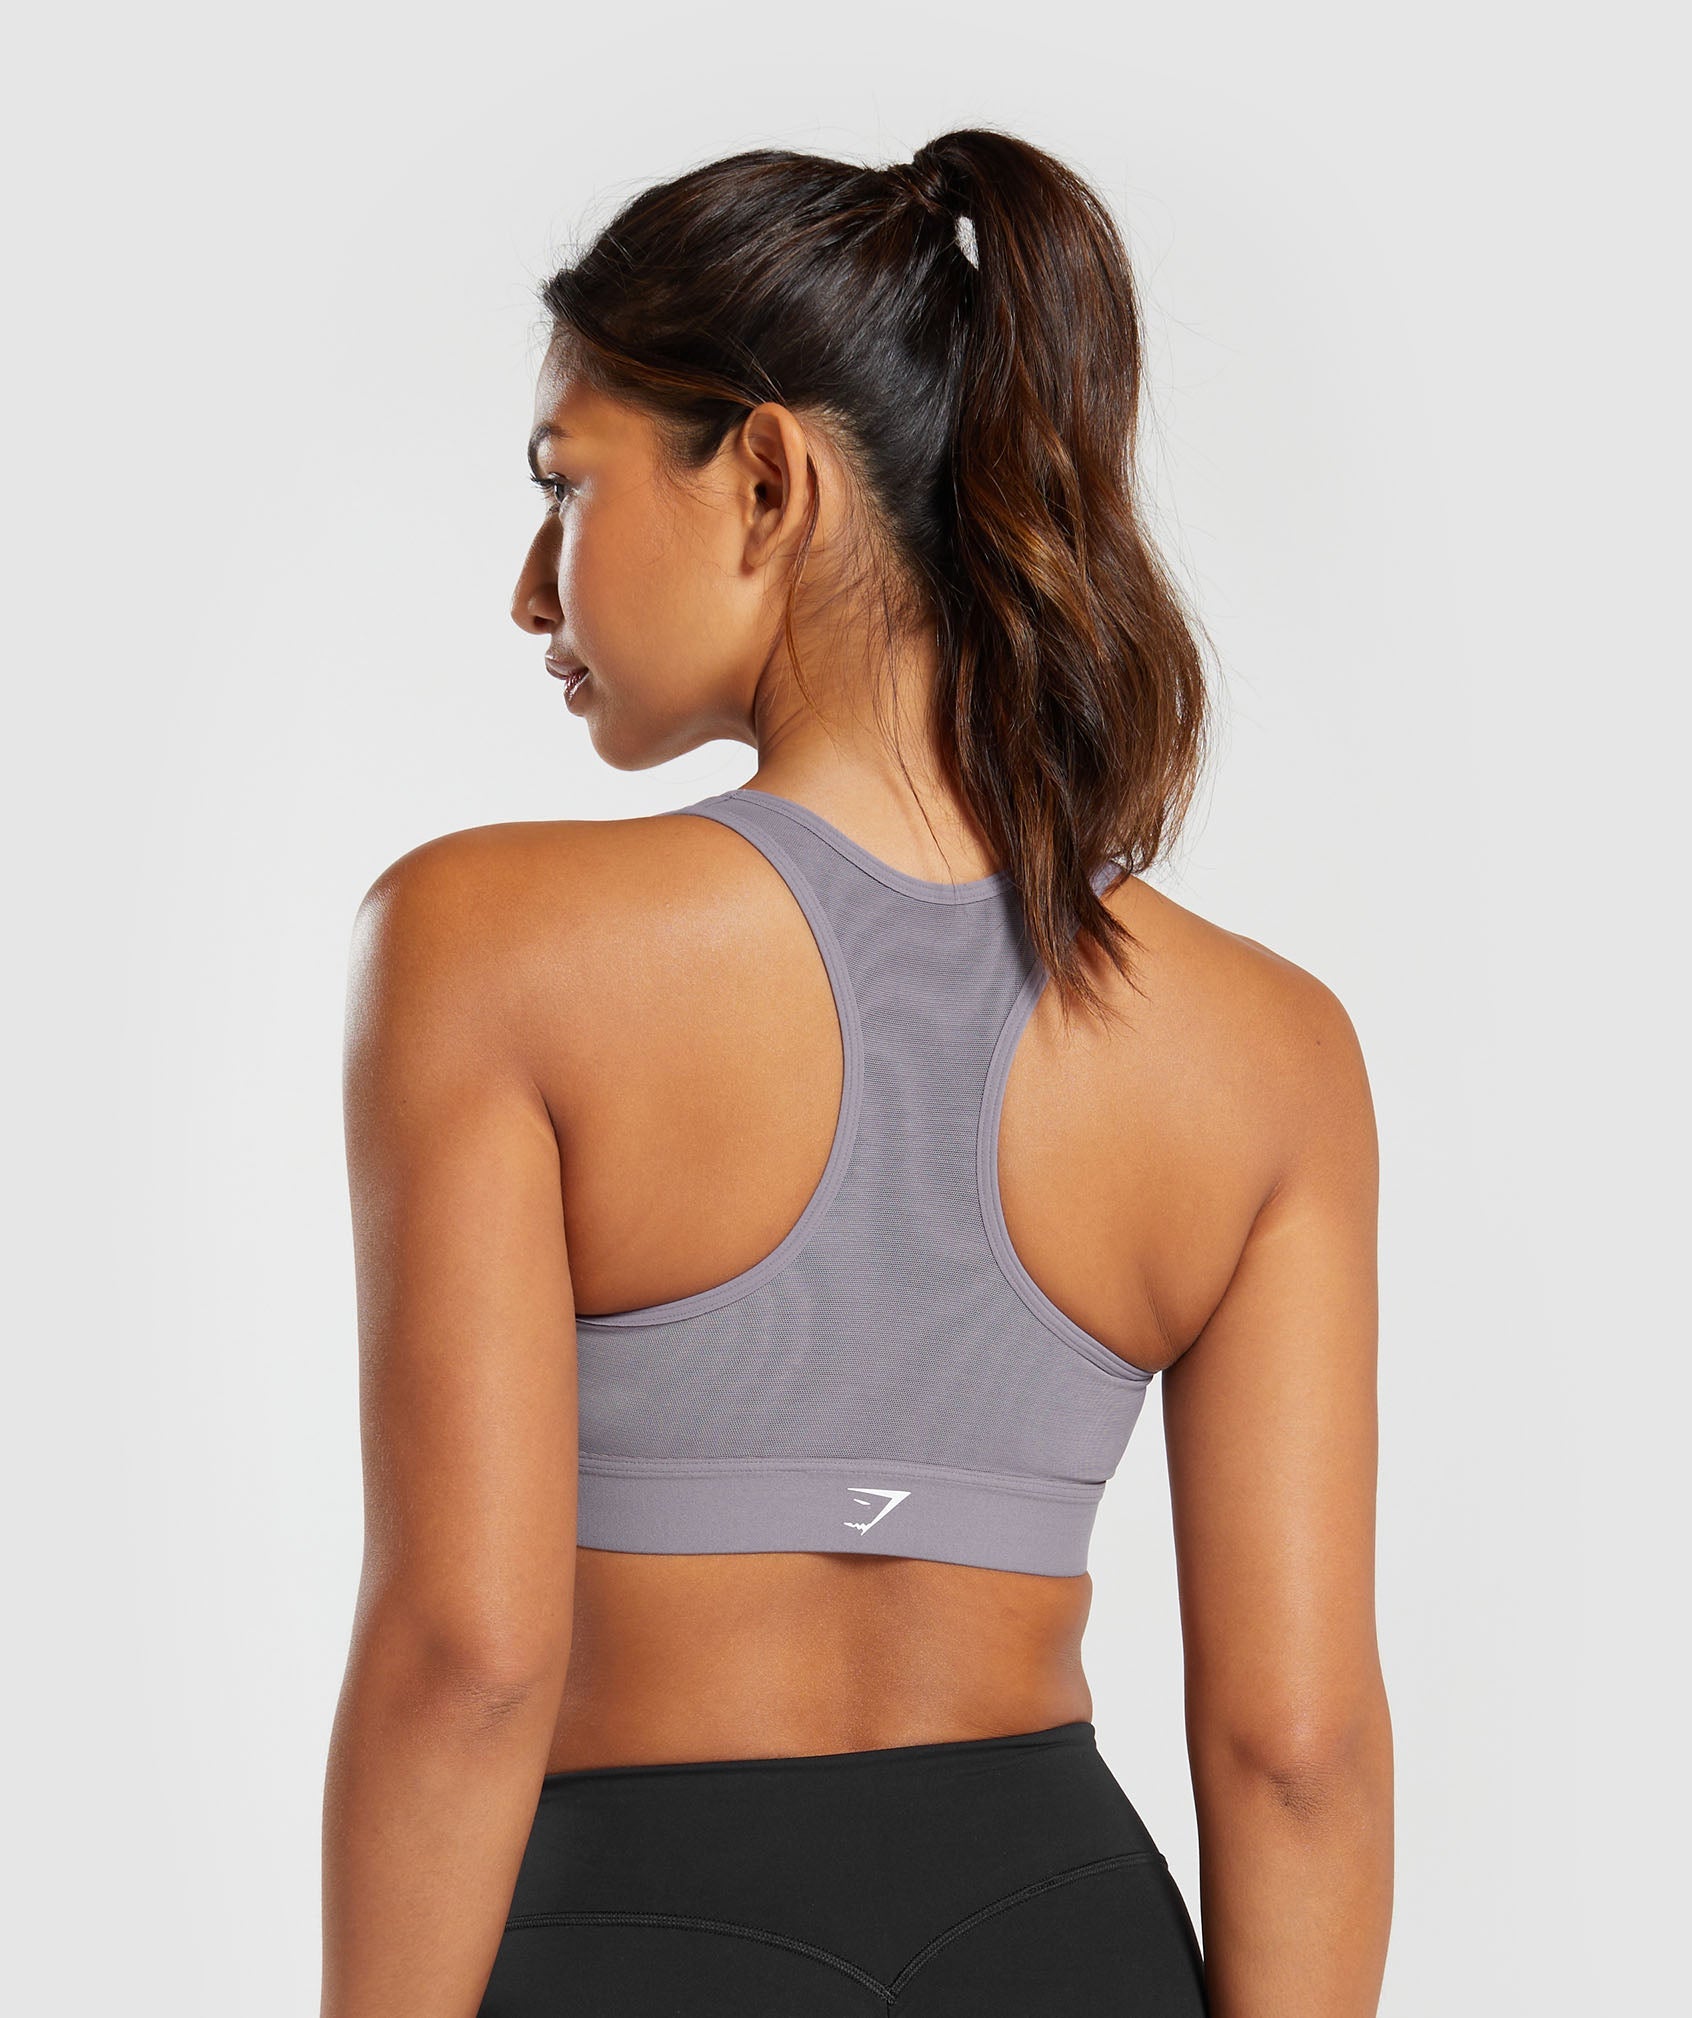 NWOT Gymshark Athletic Sports Bra Size XS Violet Gray Color